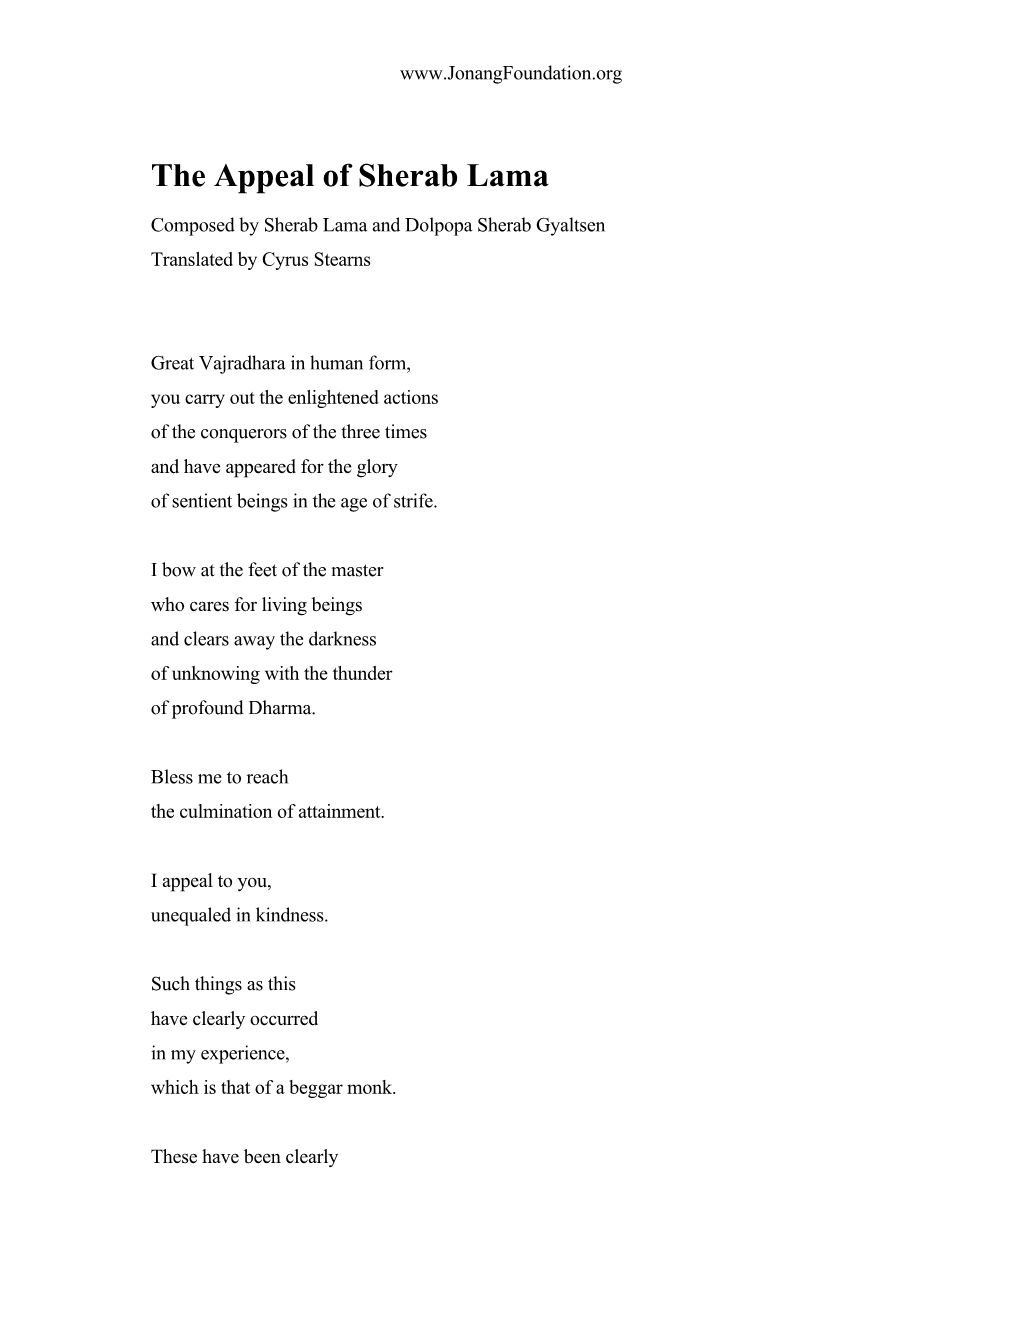 The Appeal of Sherab Lama